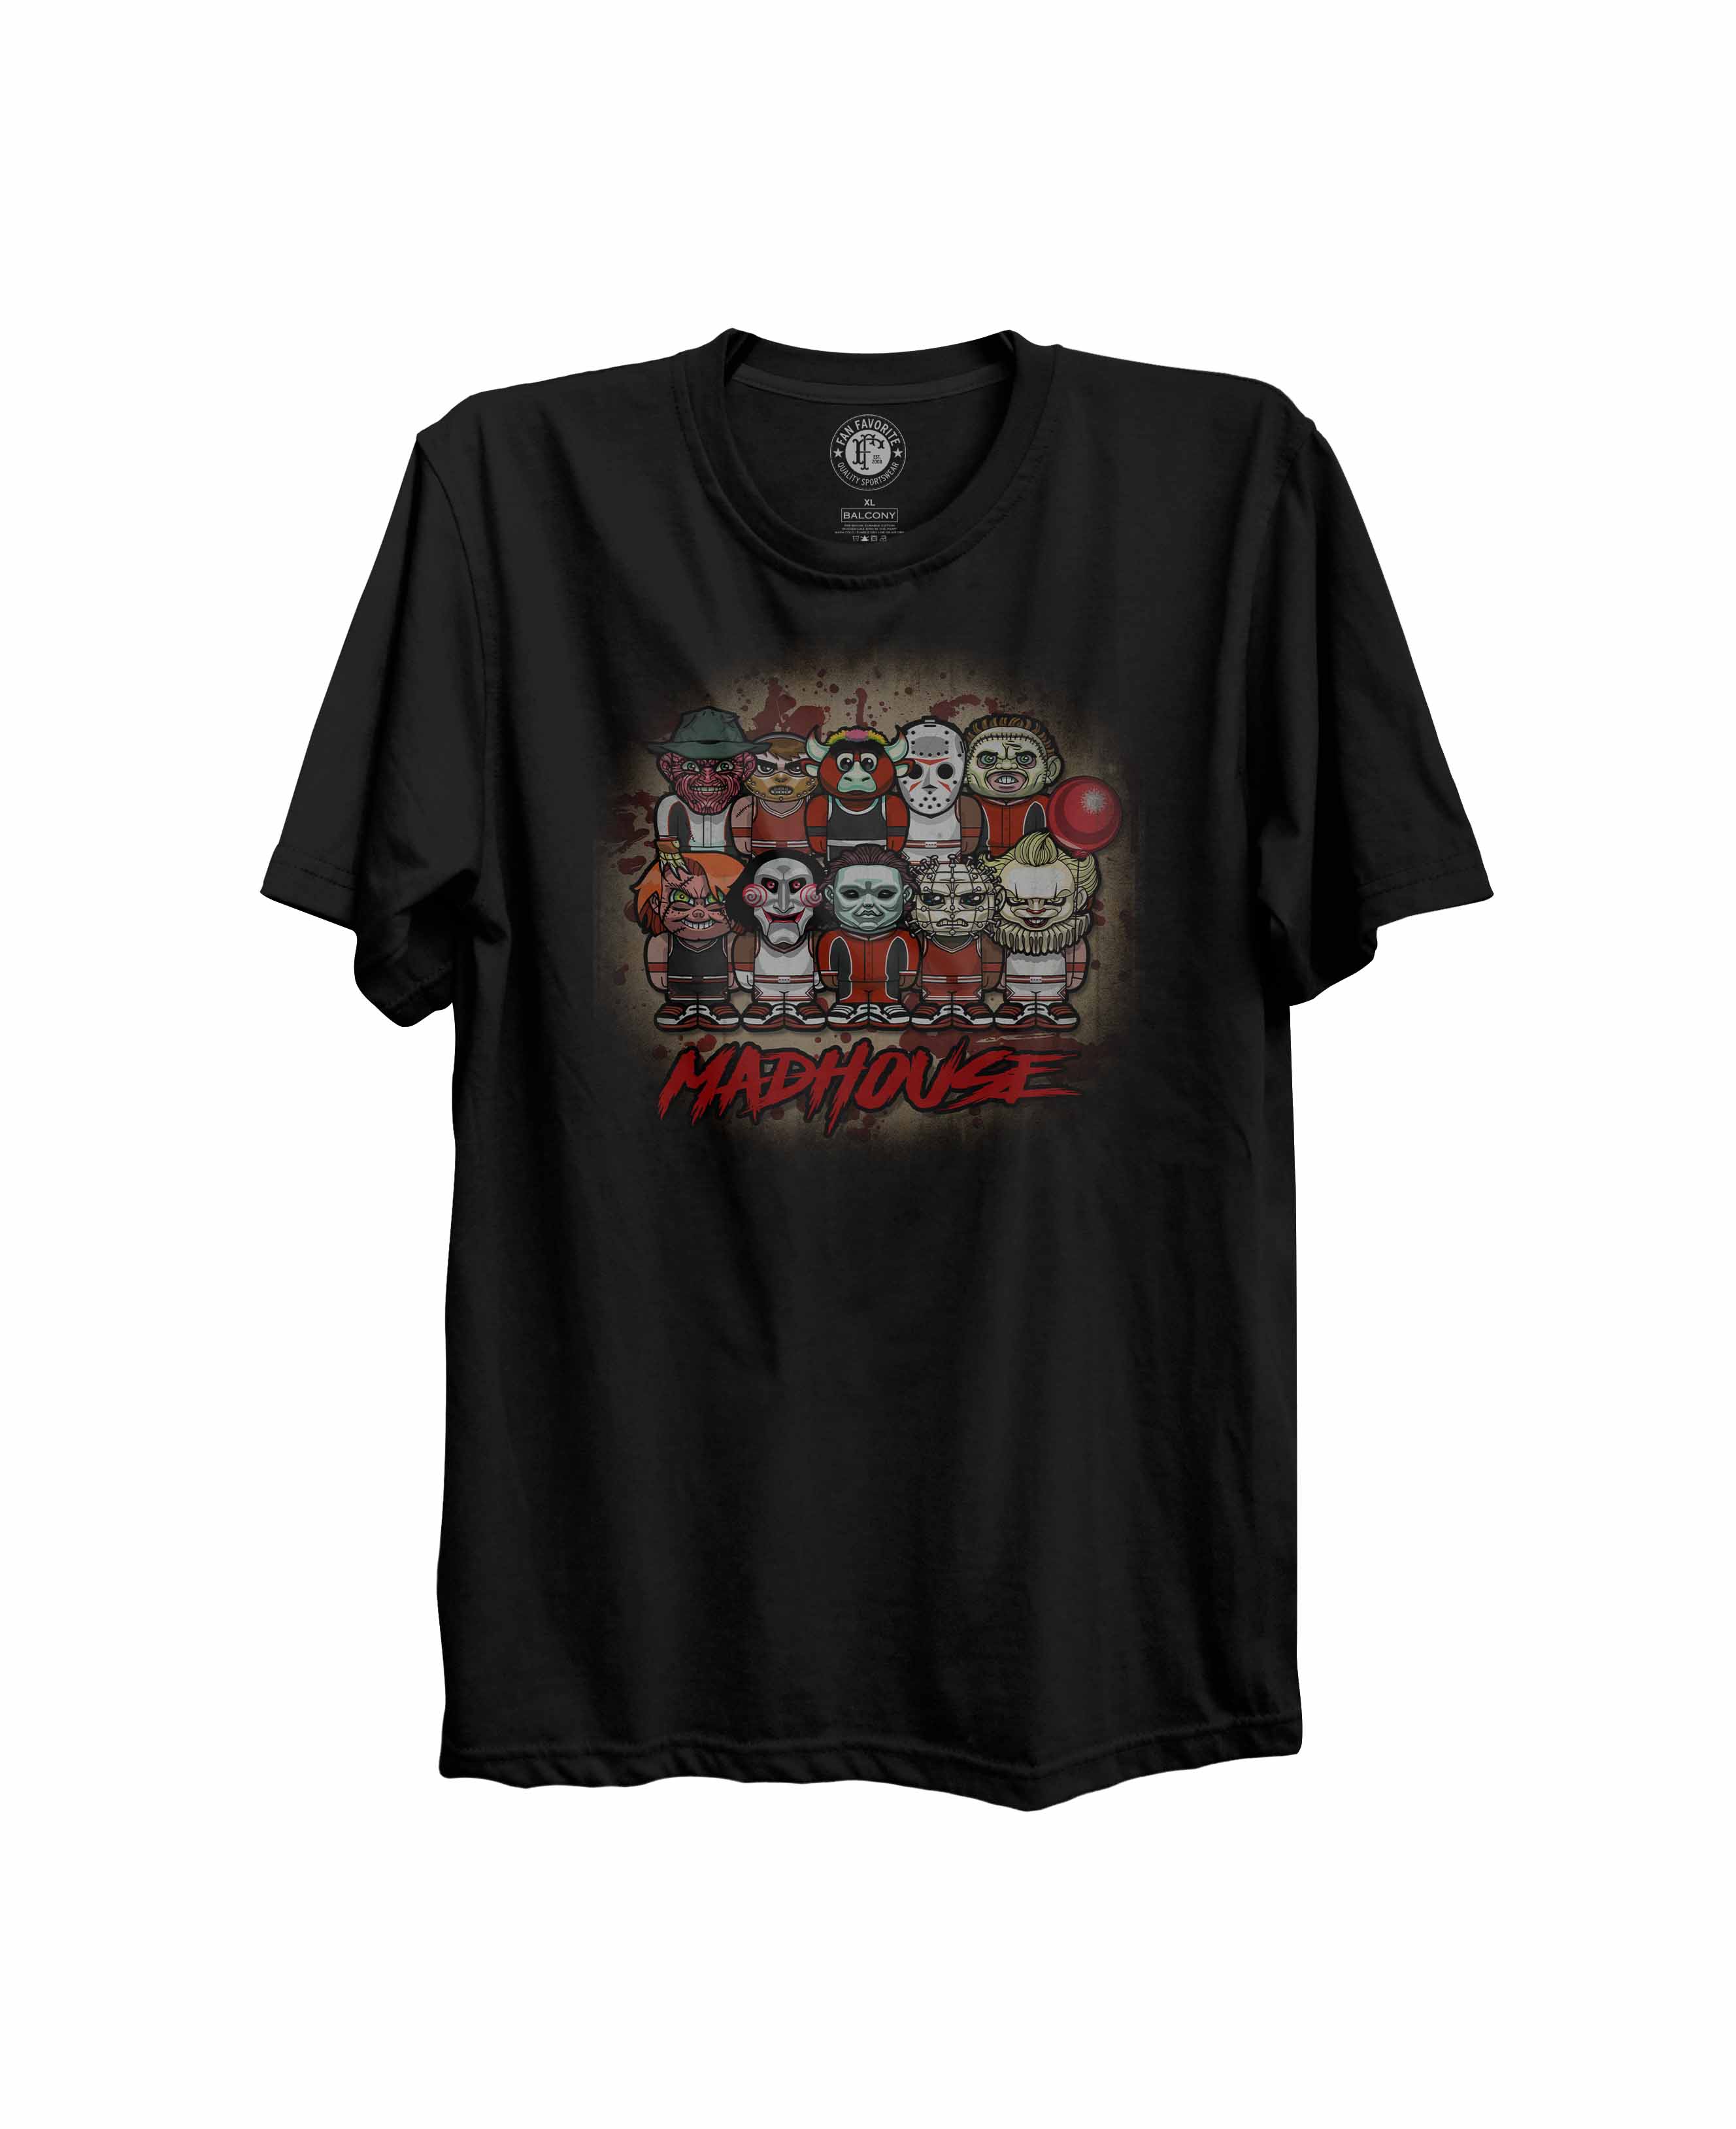 Madhouse Kourt Killers T-Shirt